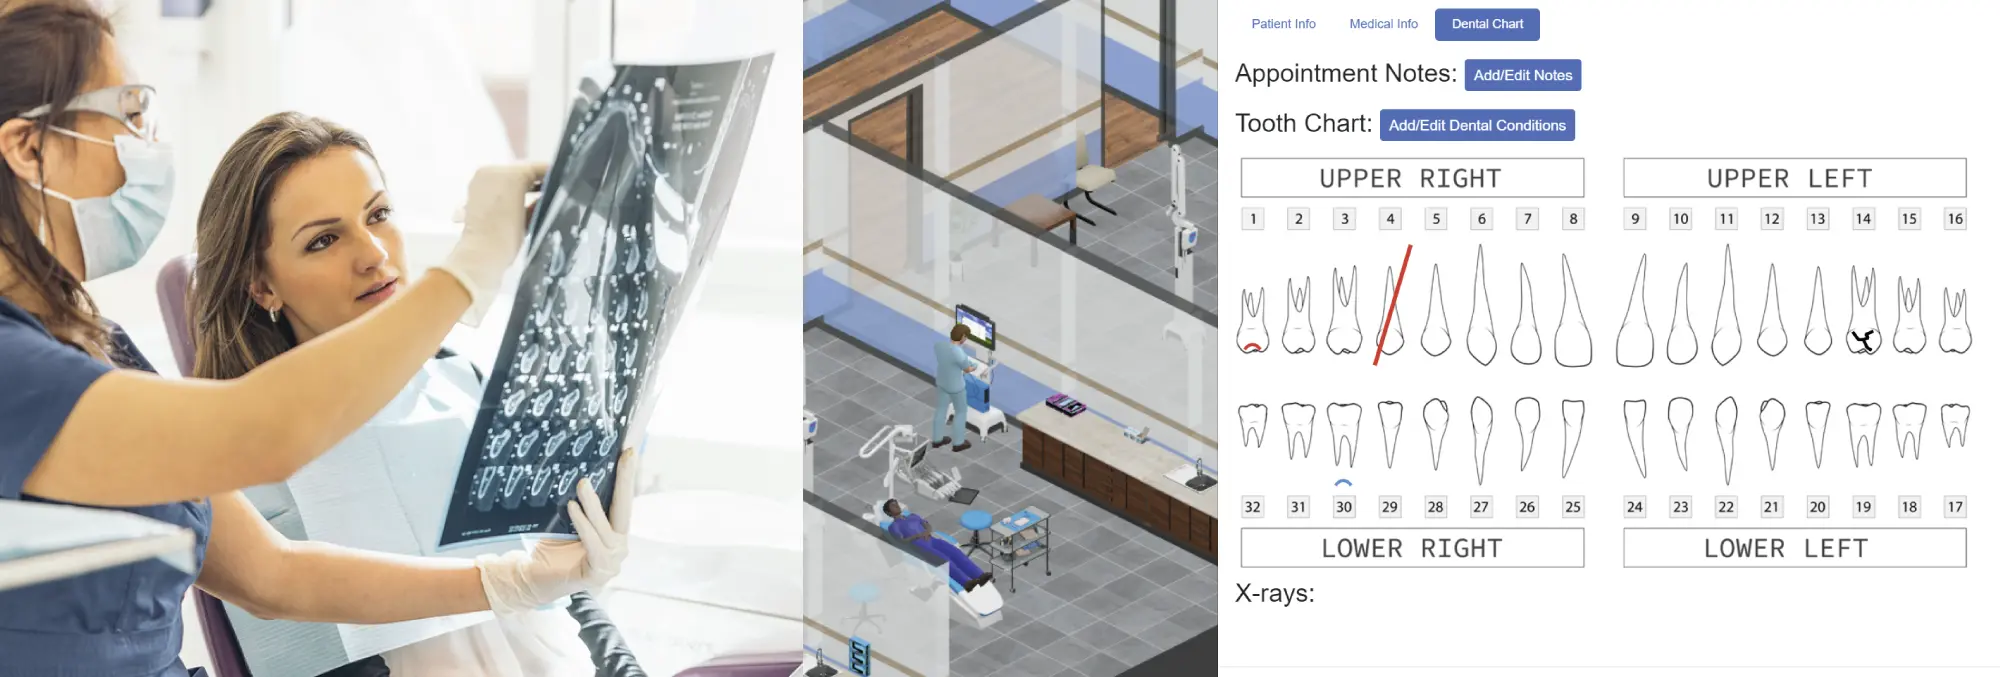 Dental Simulation Screenshot